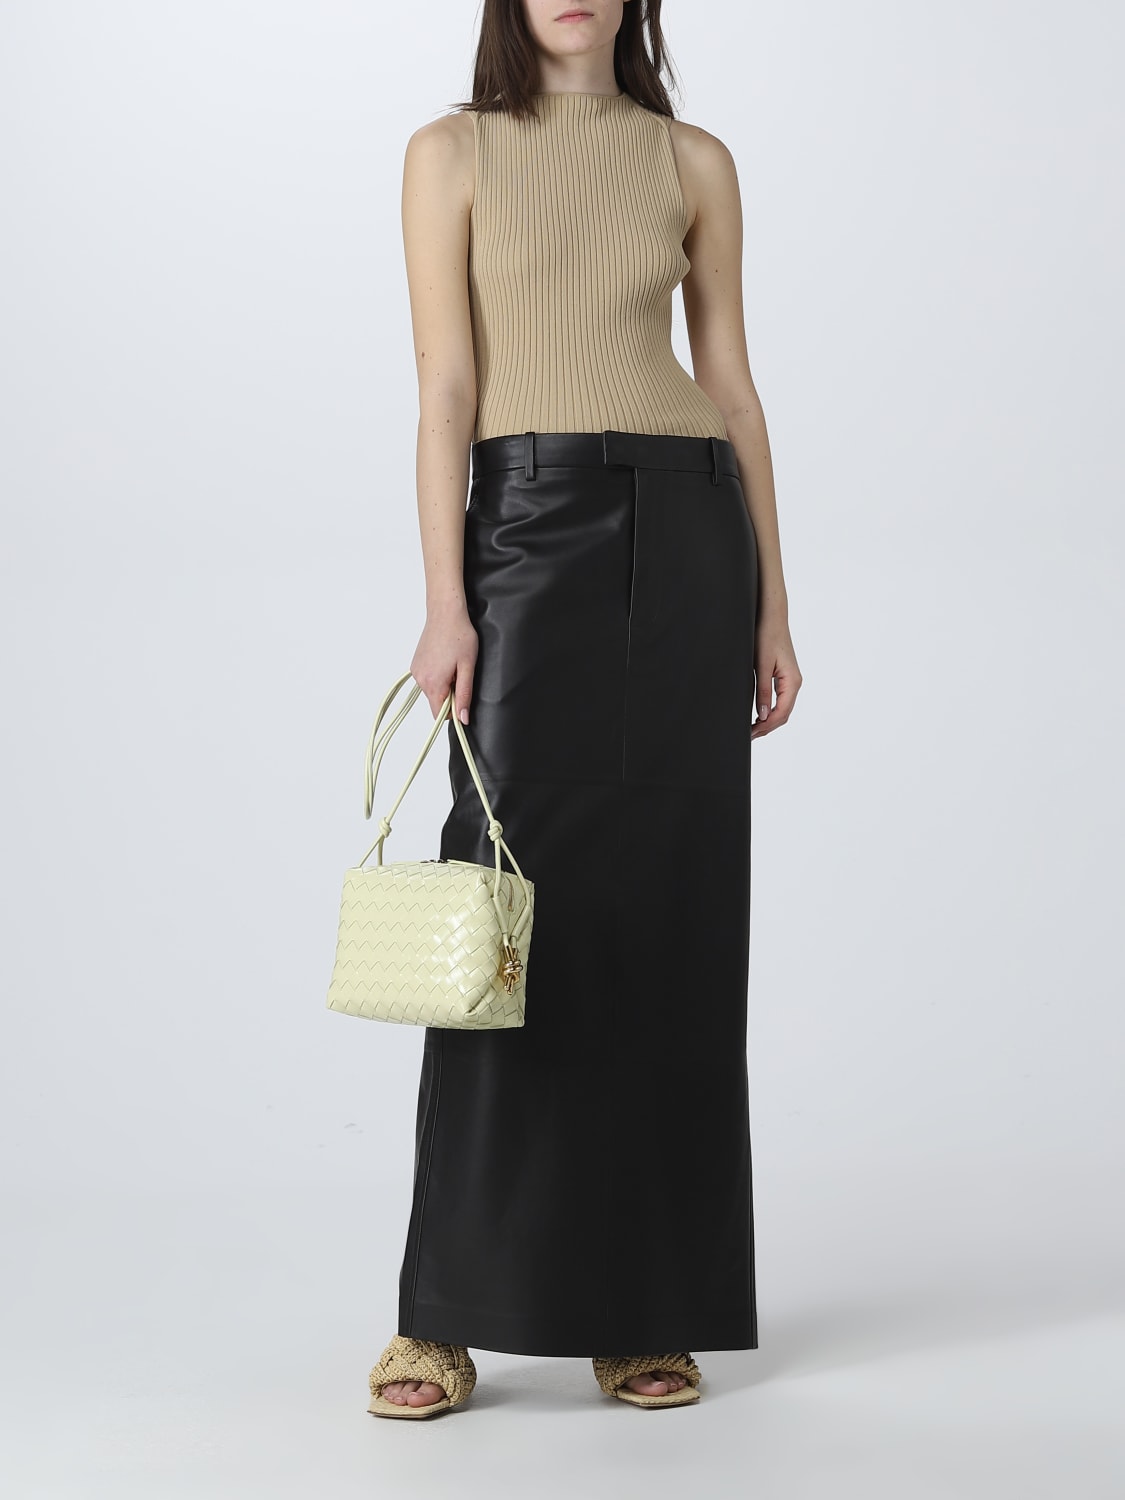 BOTTEGA VENETA: Loop bag in brushed leather - Black  Bottega Veneta  crossbody bags 736130V2GV1 online at